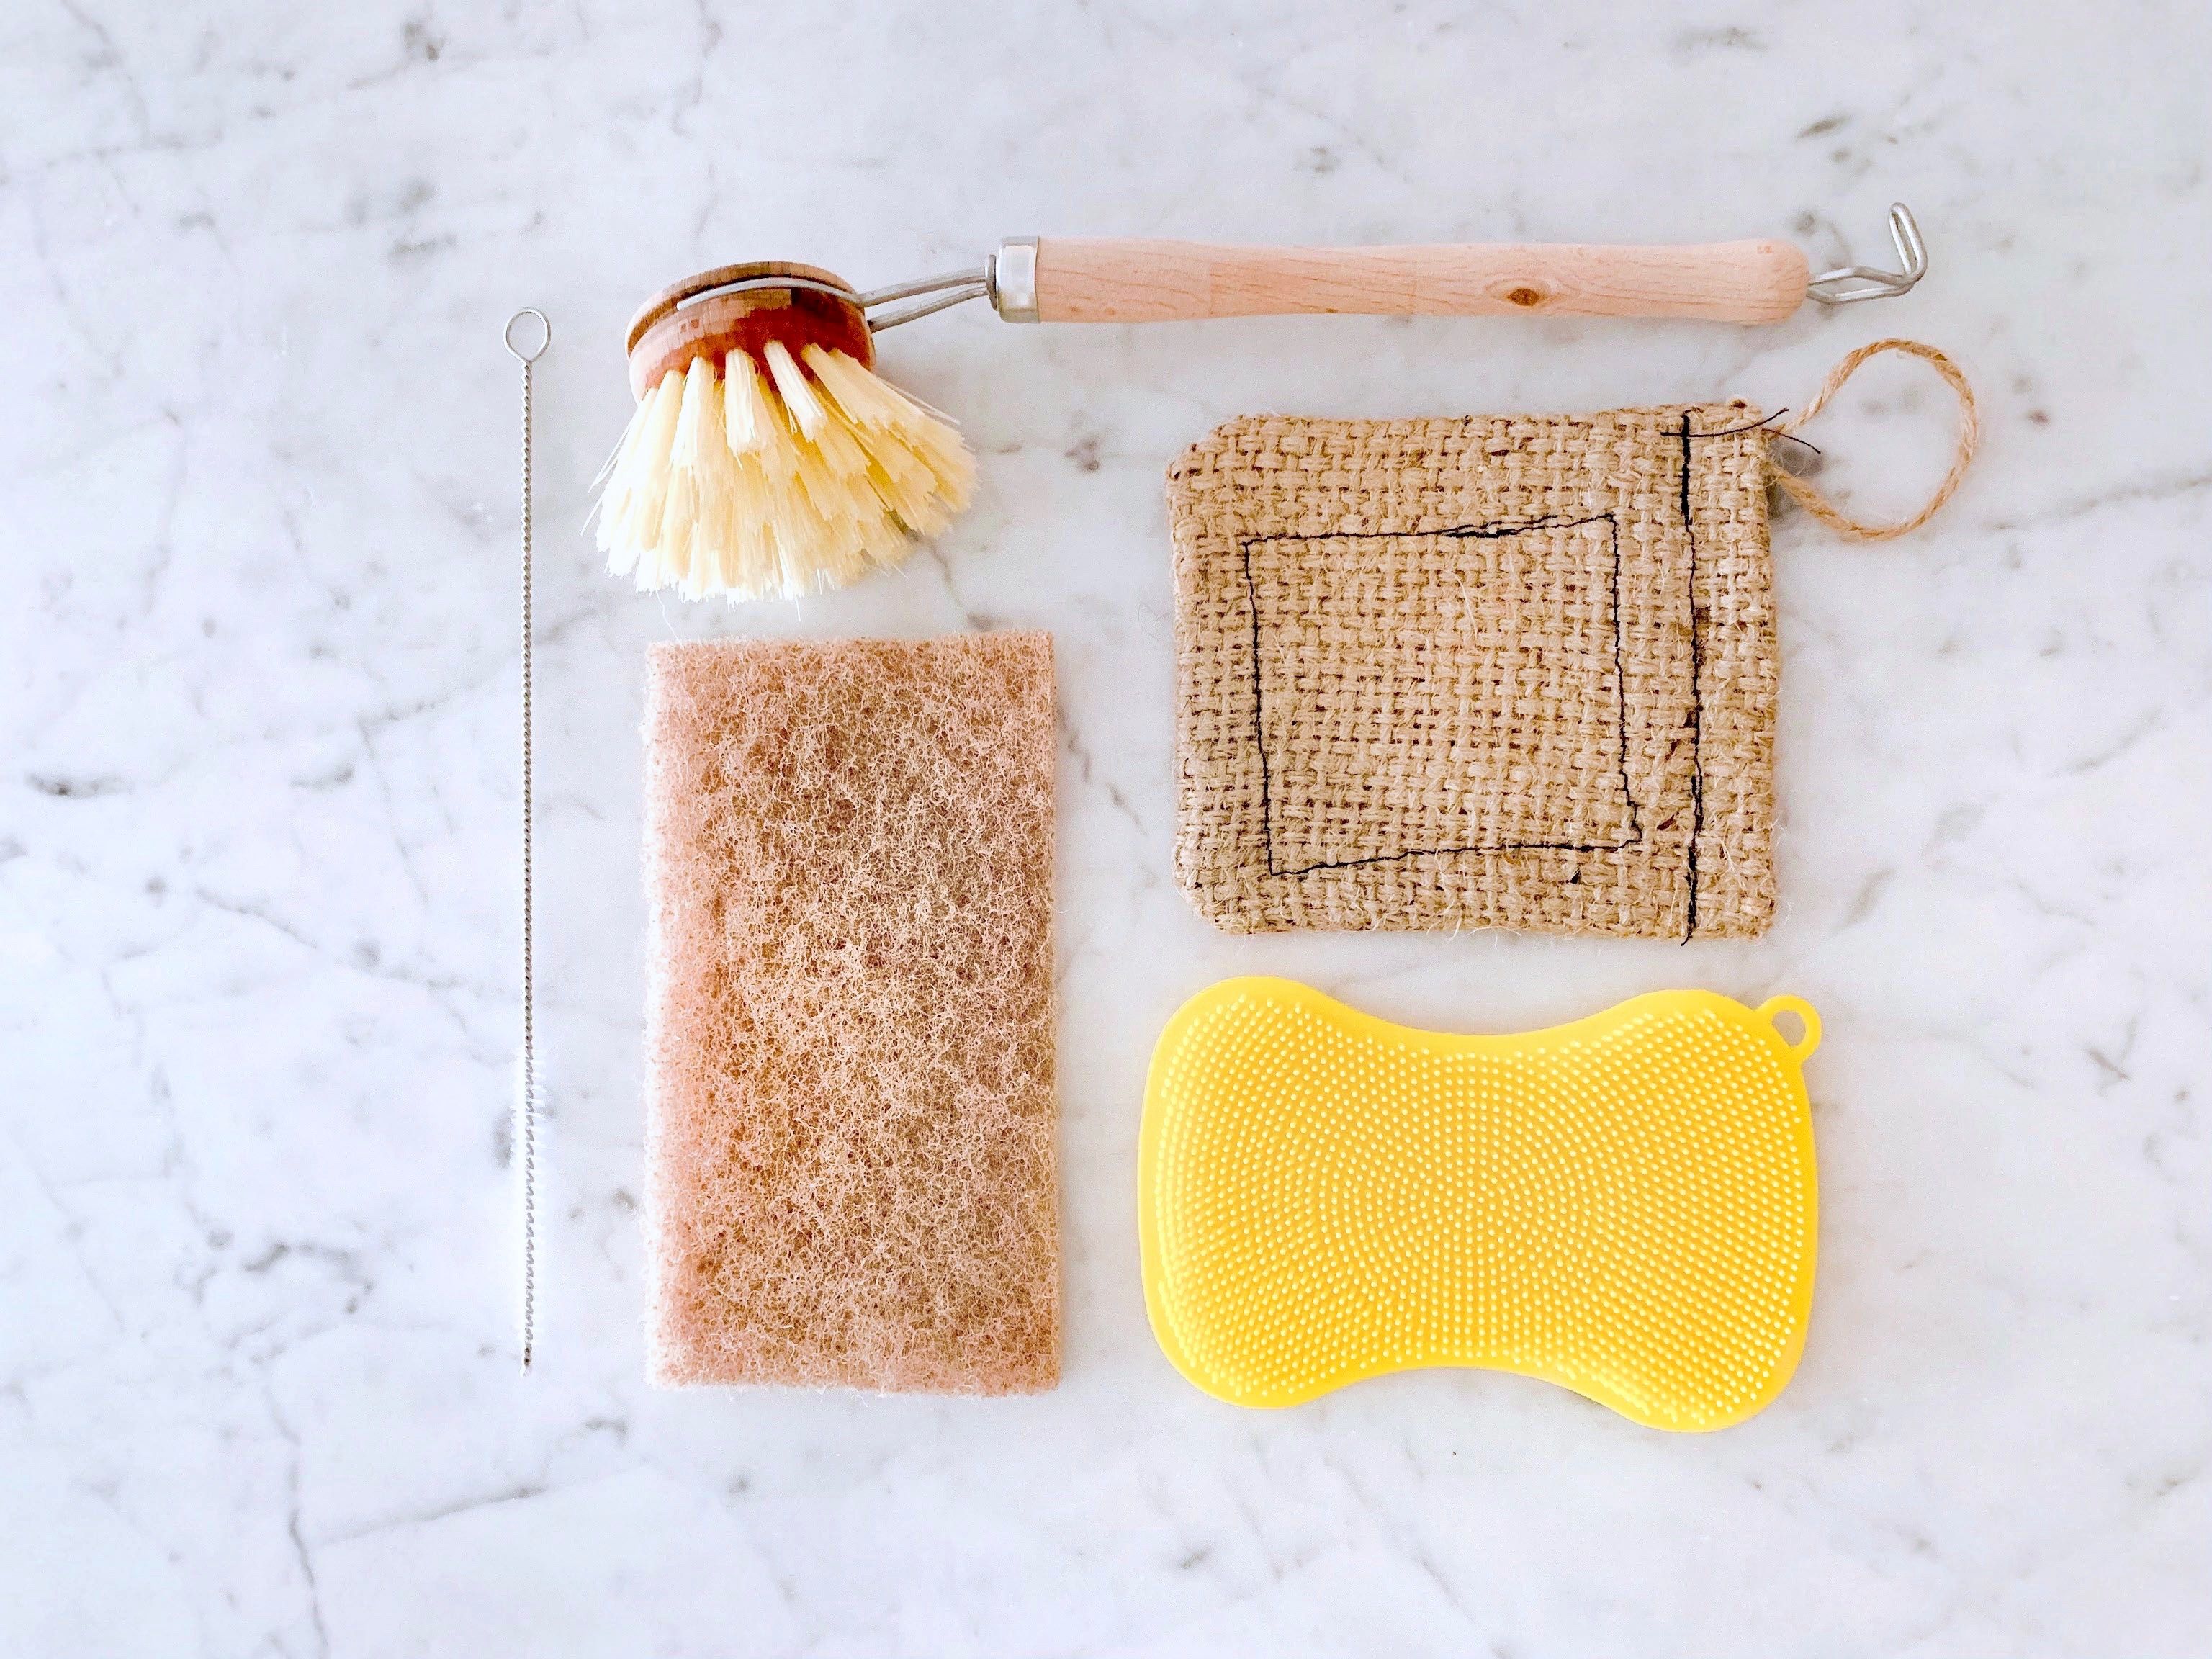 How Often Should You Replace Your Dish-Washing Sponge?